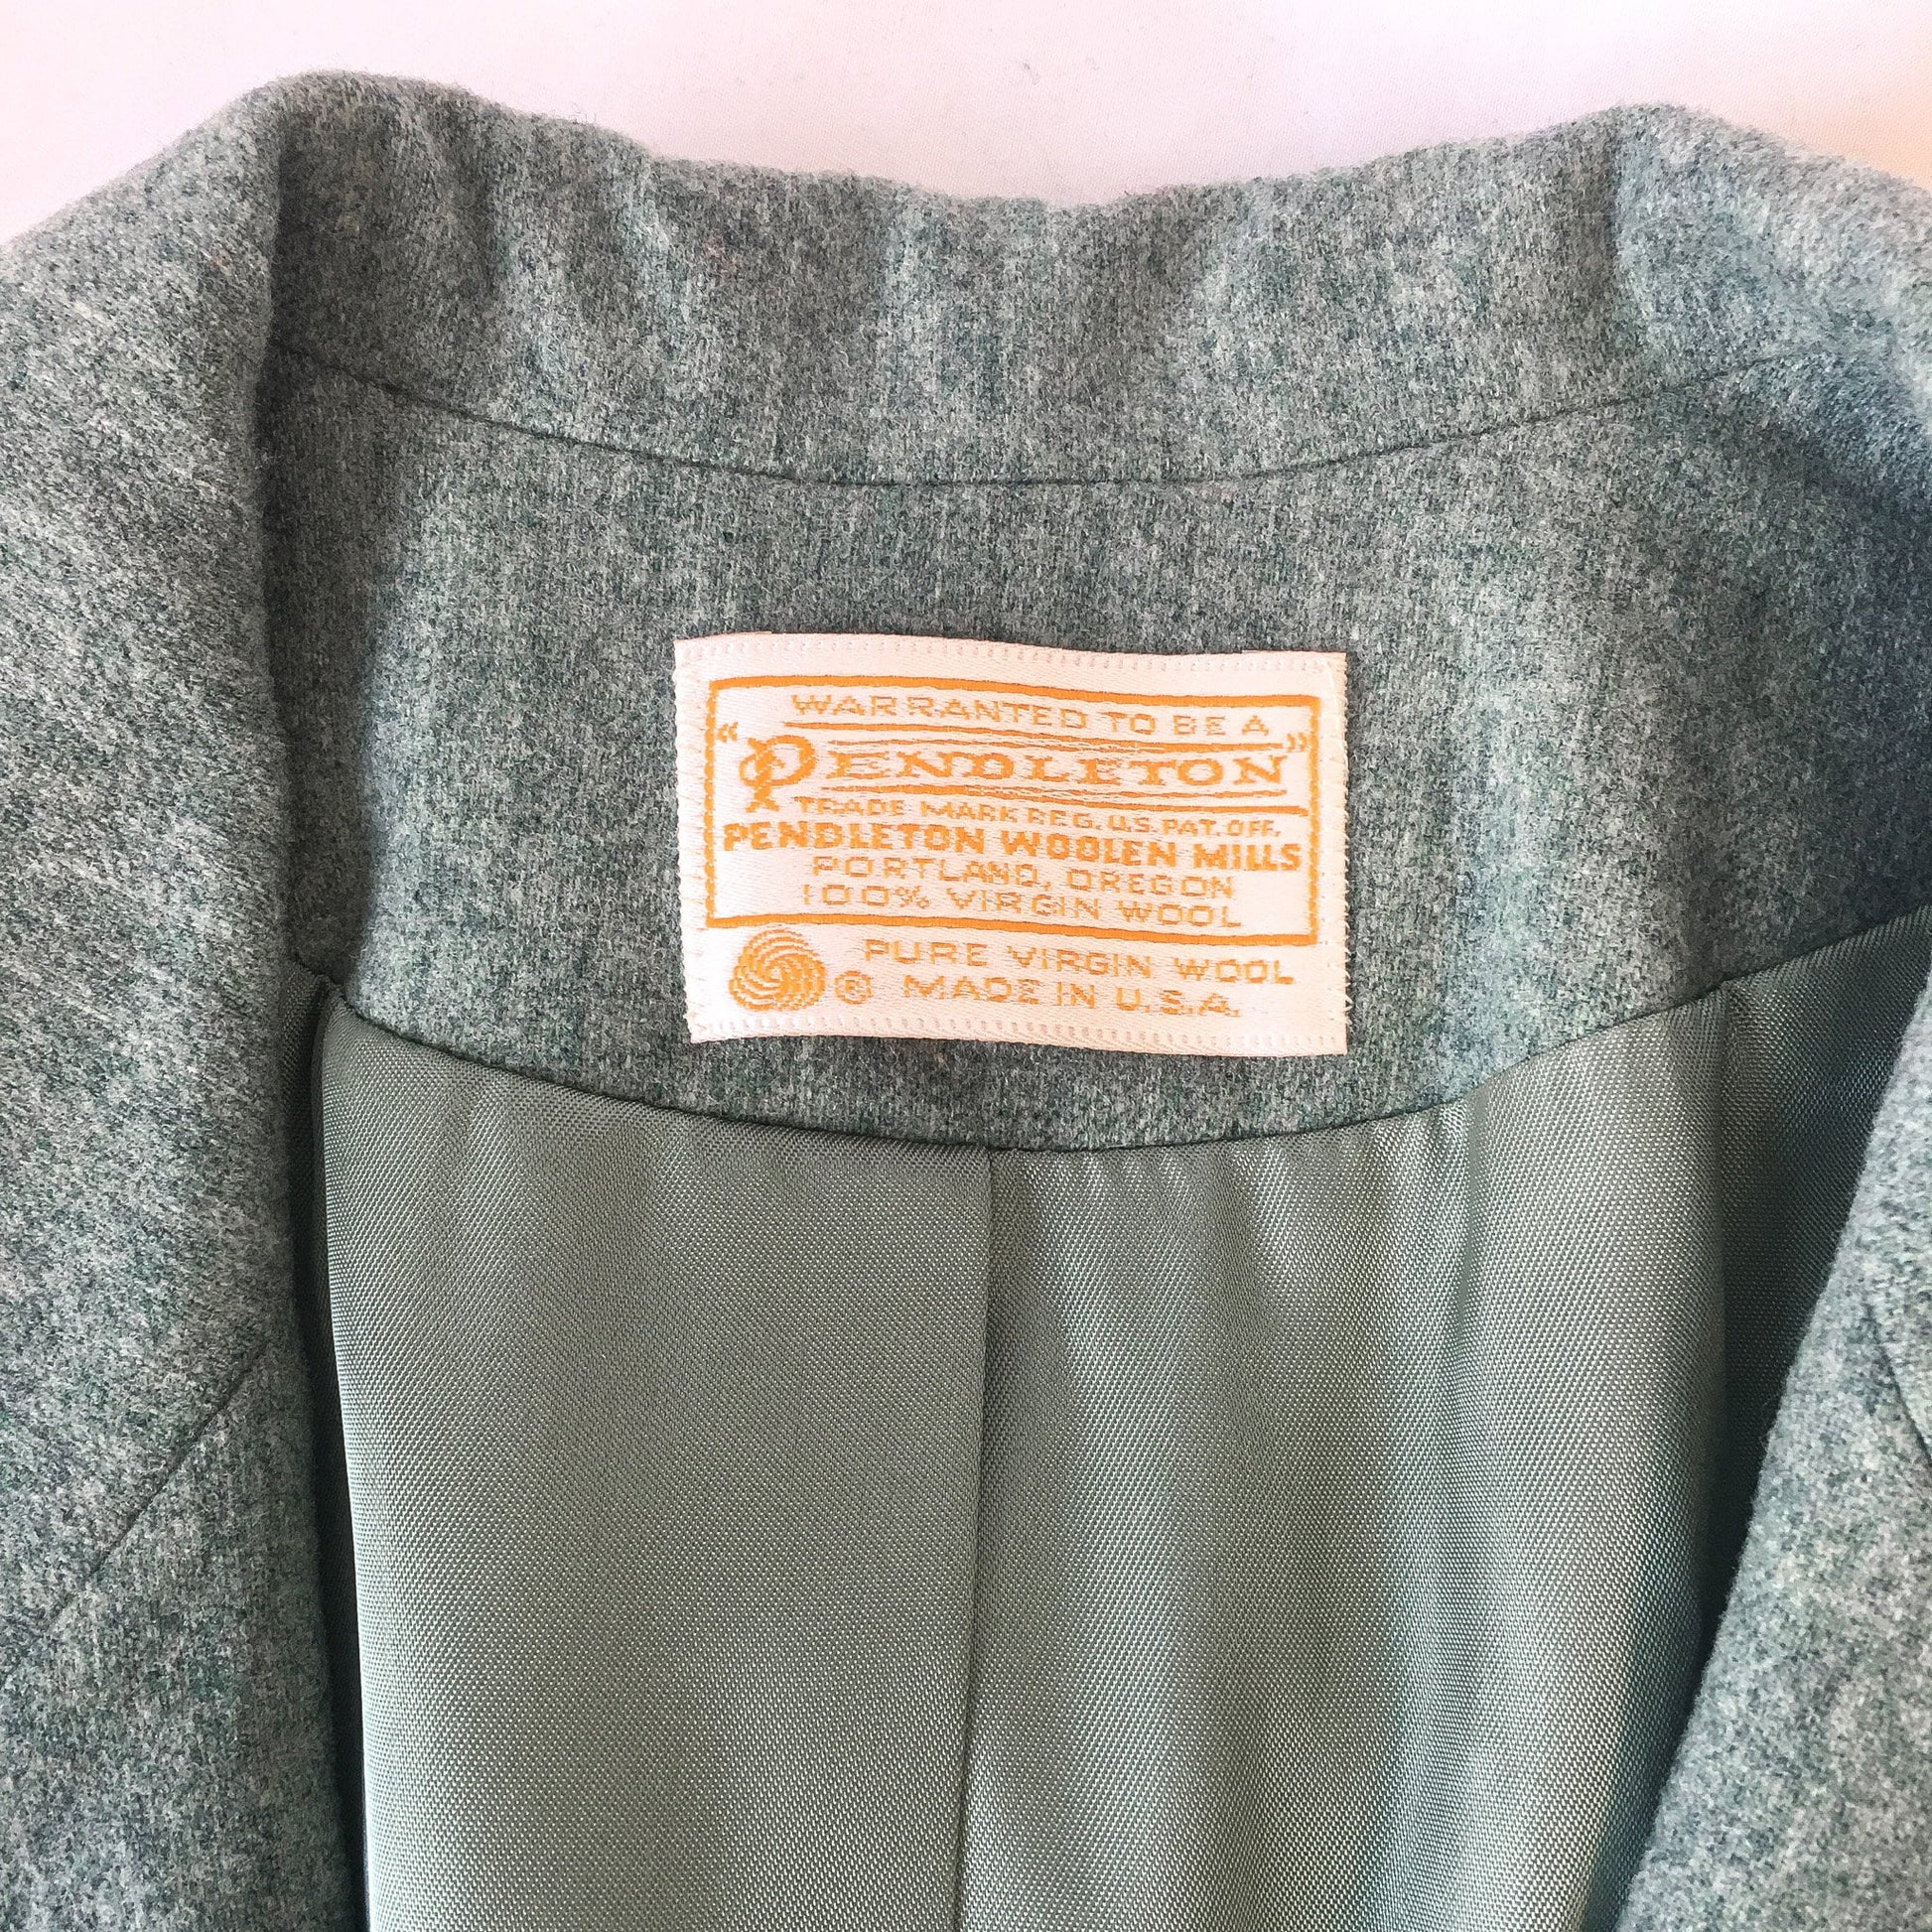 Vintage 90s Pendleton Pastel Blue/Green Wool Blazer, Vintage Sz. 12, 100% Pure Wool Blazer